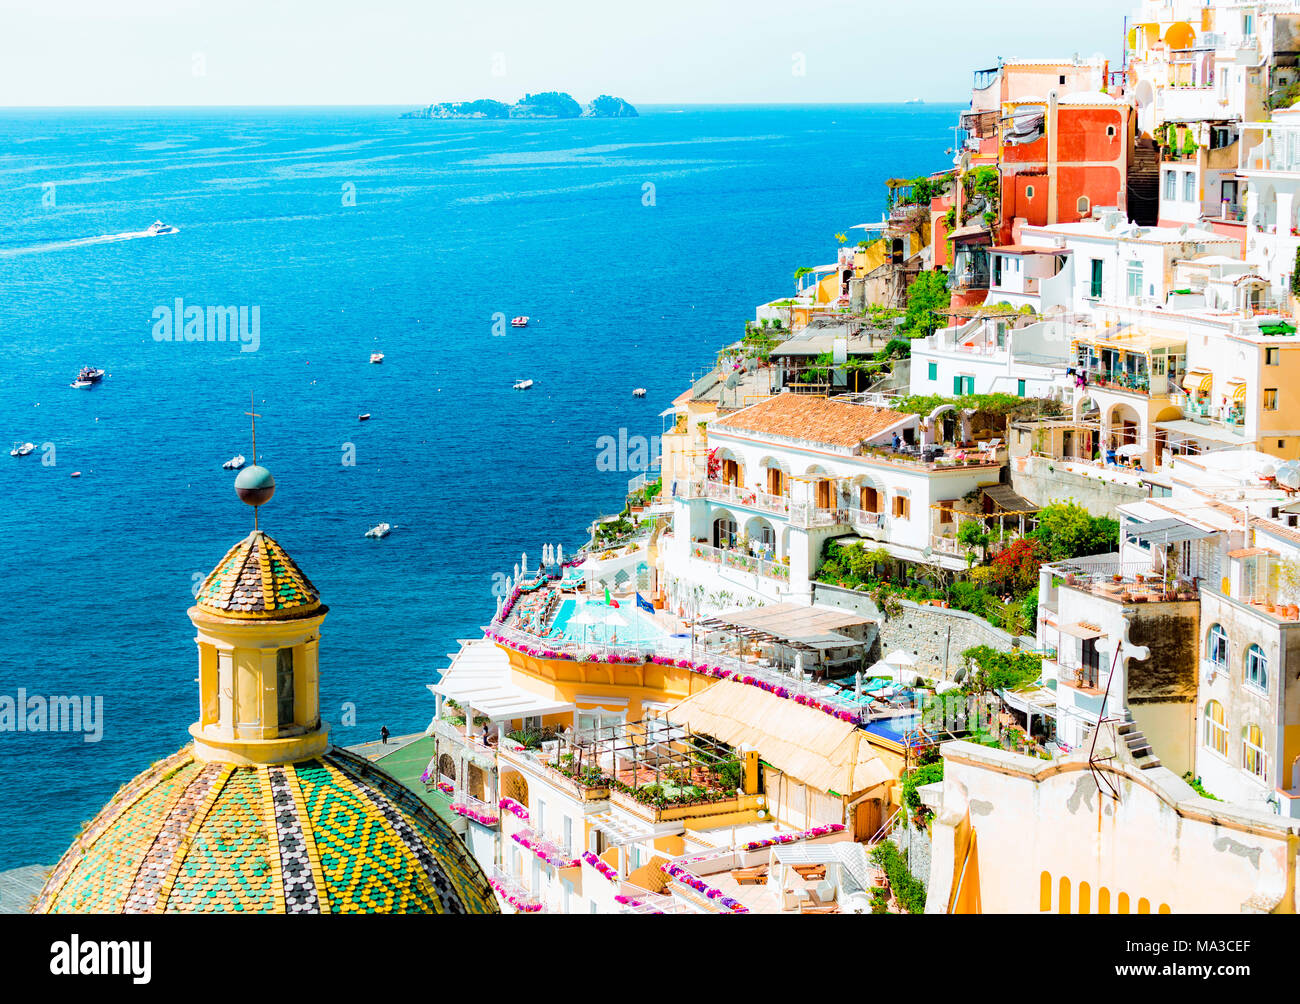 Amalfi coast italy hi-res stock photography and images - Alamy